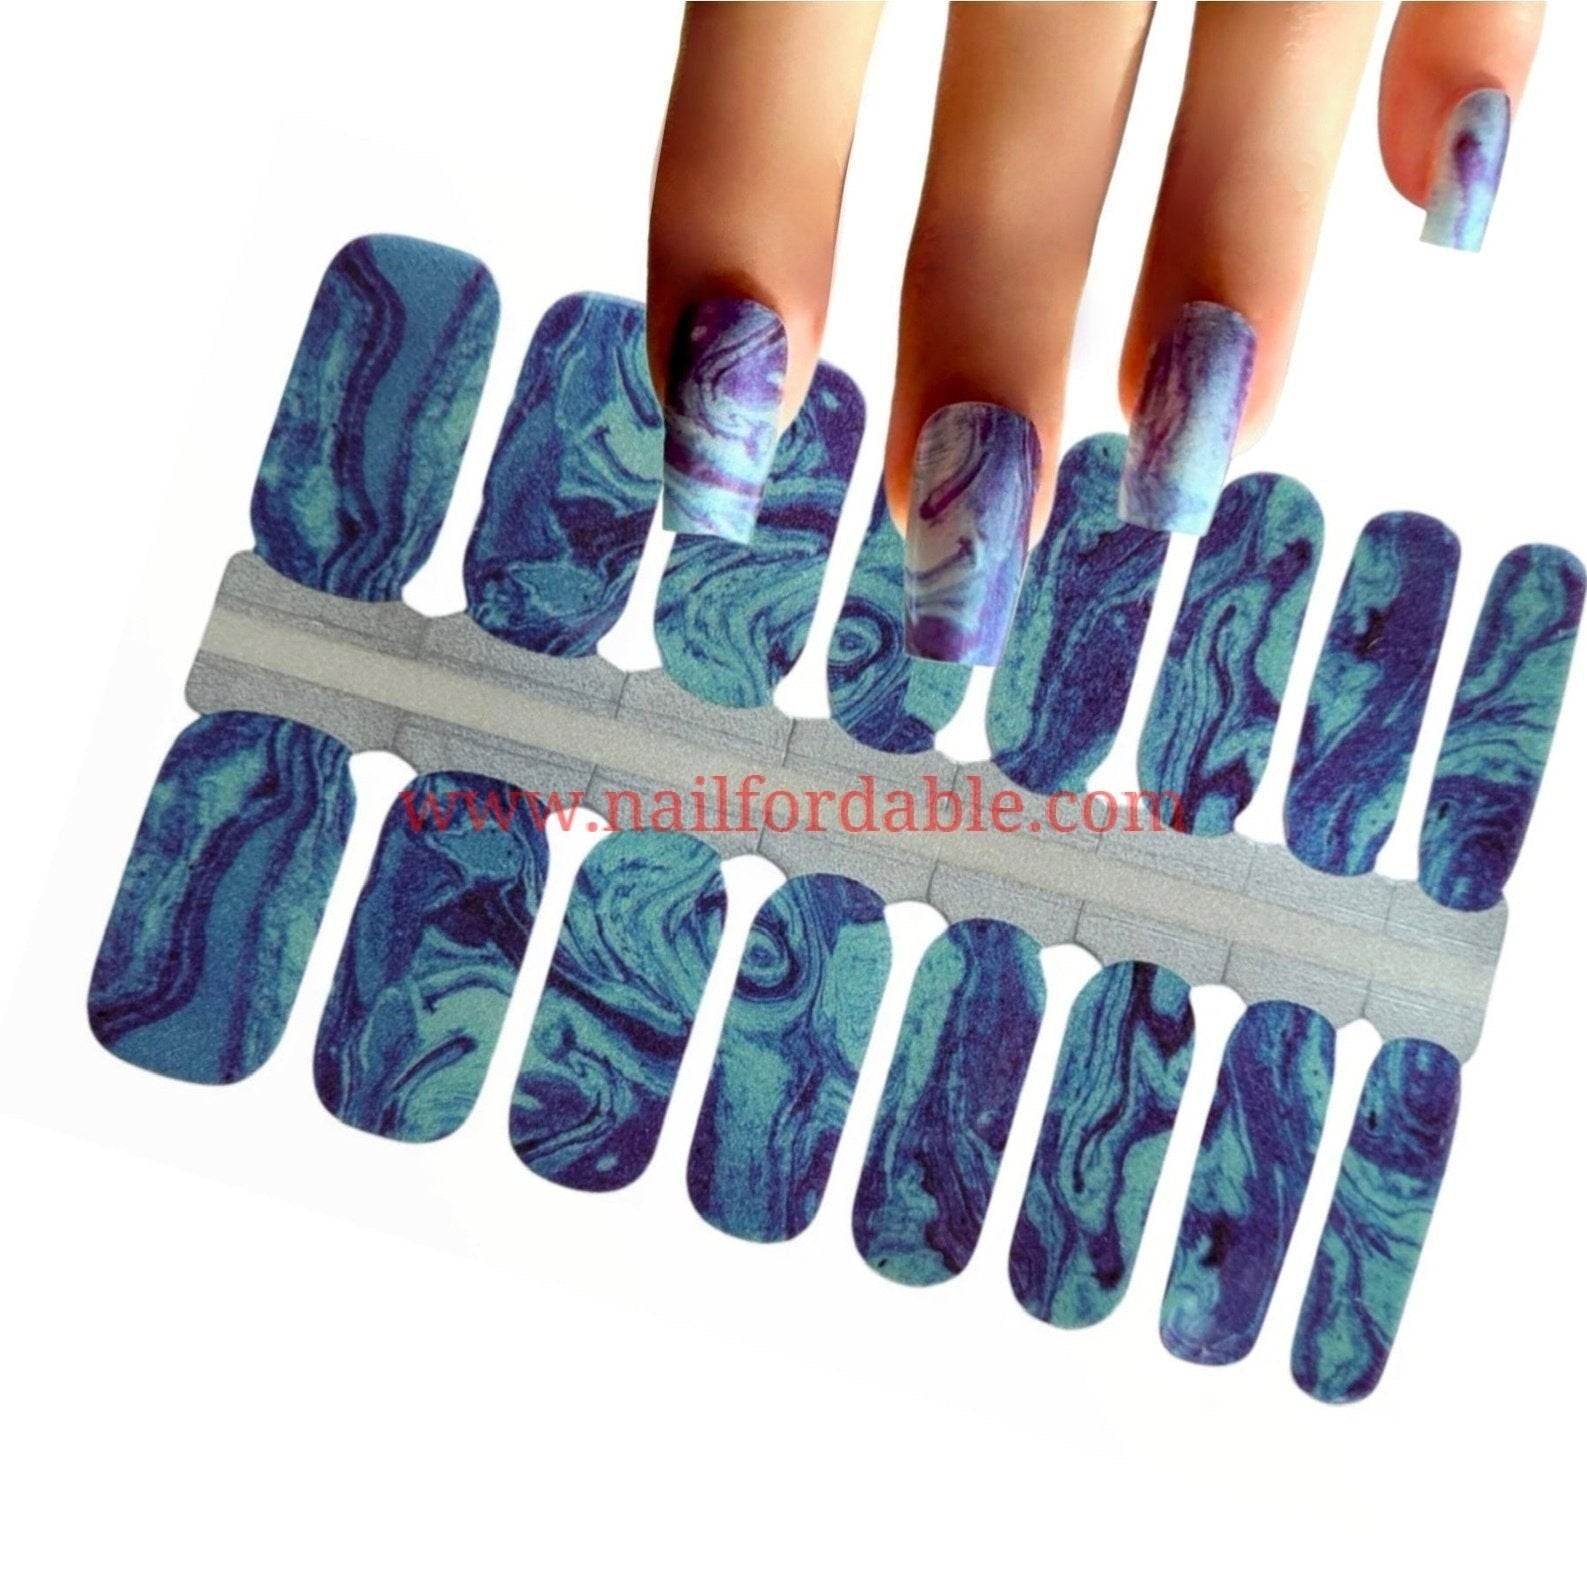 Liquid dreams Nail Wraps | Semi Cured Gel Wraps | Gel Nail Wraps |Nail Polish | Nail Stickers